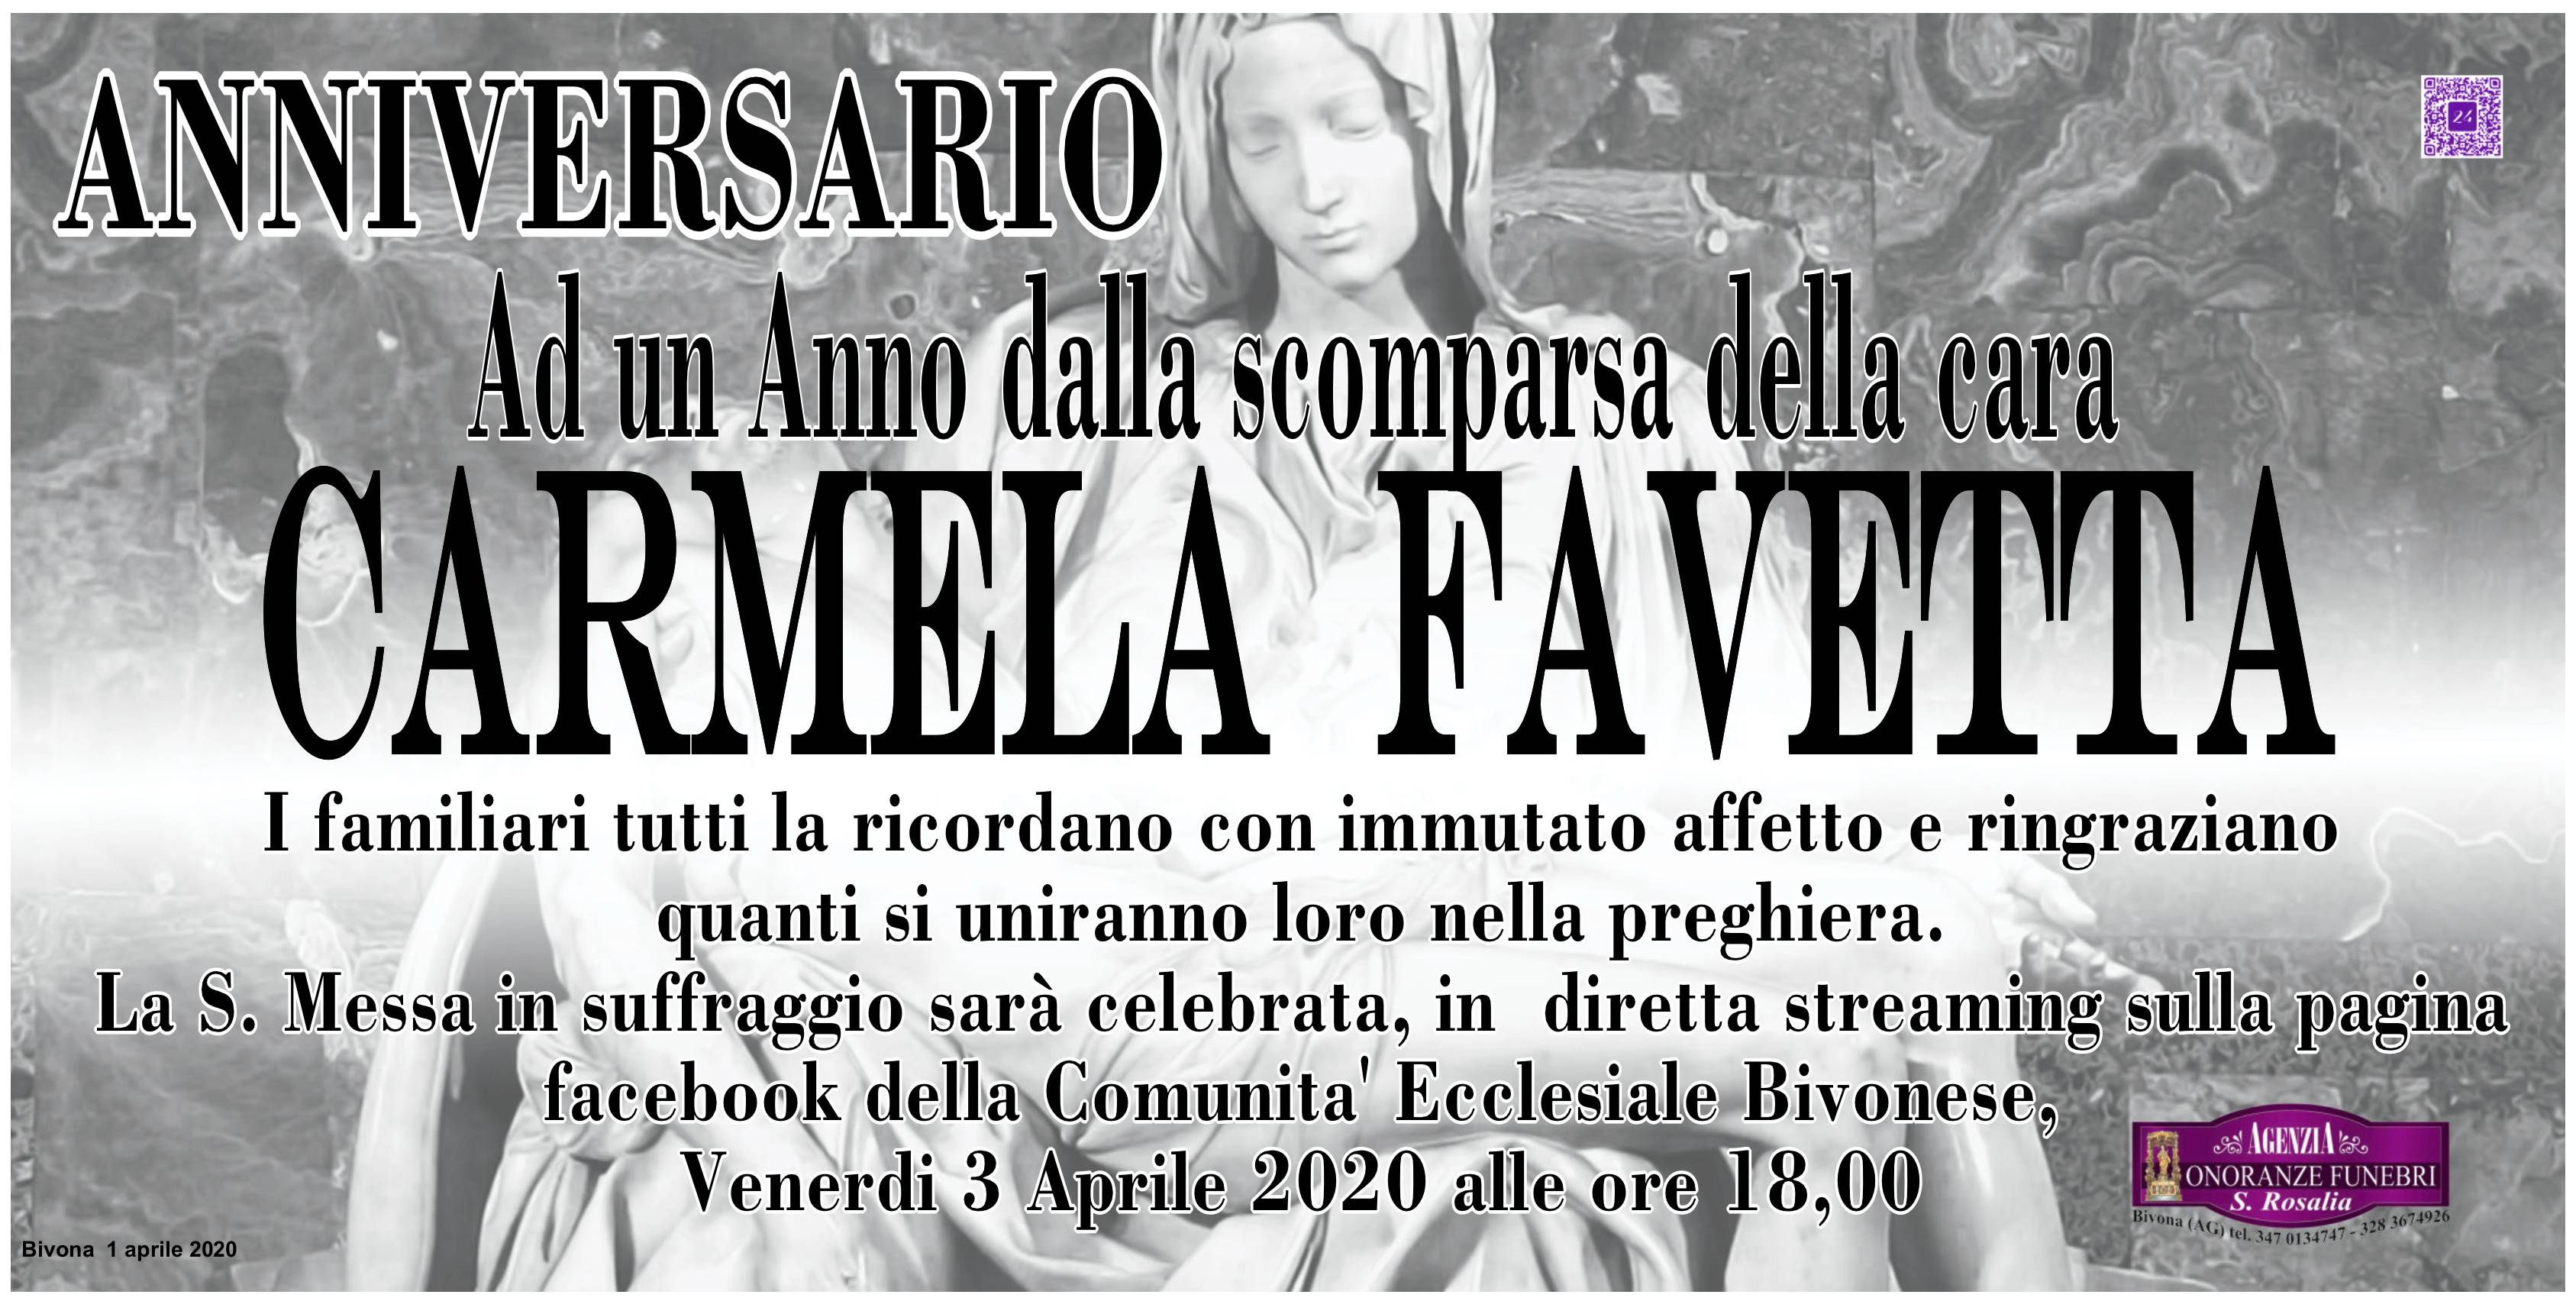 Carmela Favetta